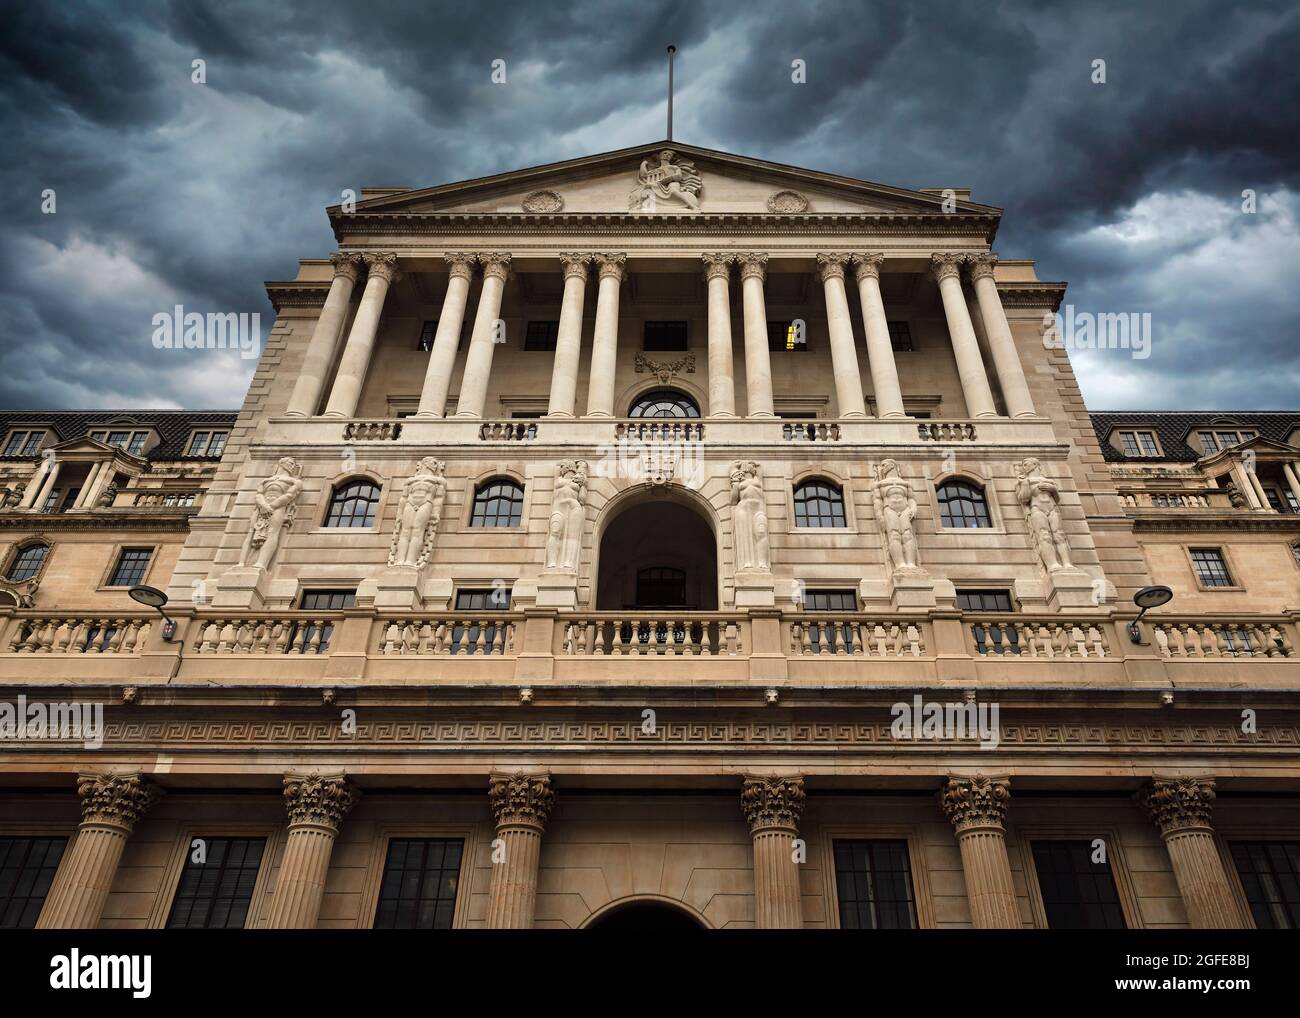 Banco de Inglaterra bajo nubes de tormenta. Threadneedle Street, Londres, Inglaterra, Reino Unido Foto de stock